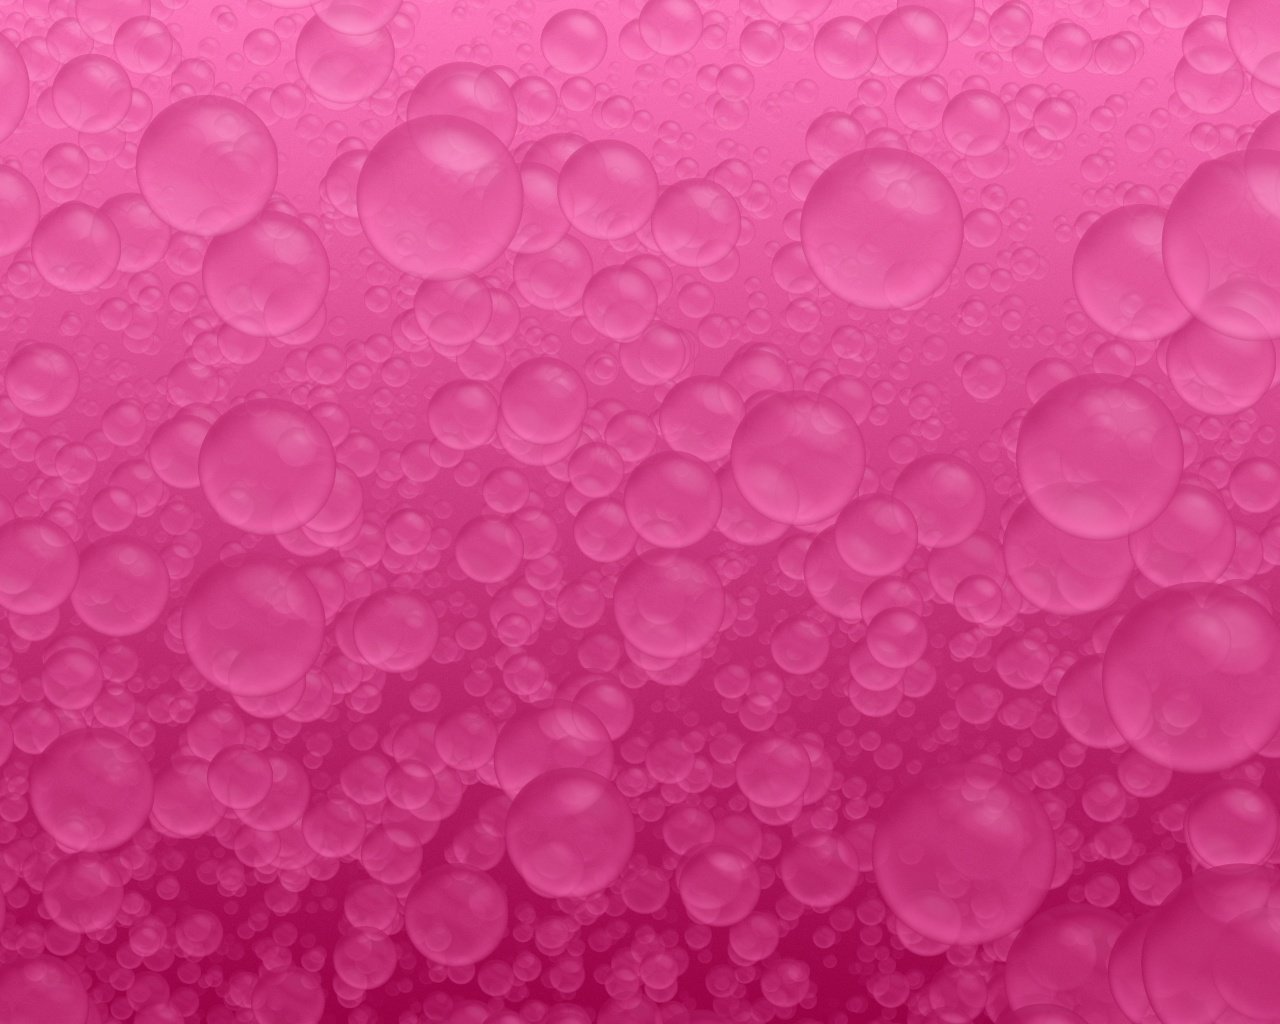 Pink Bubbles By Girldee